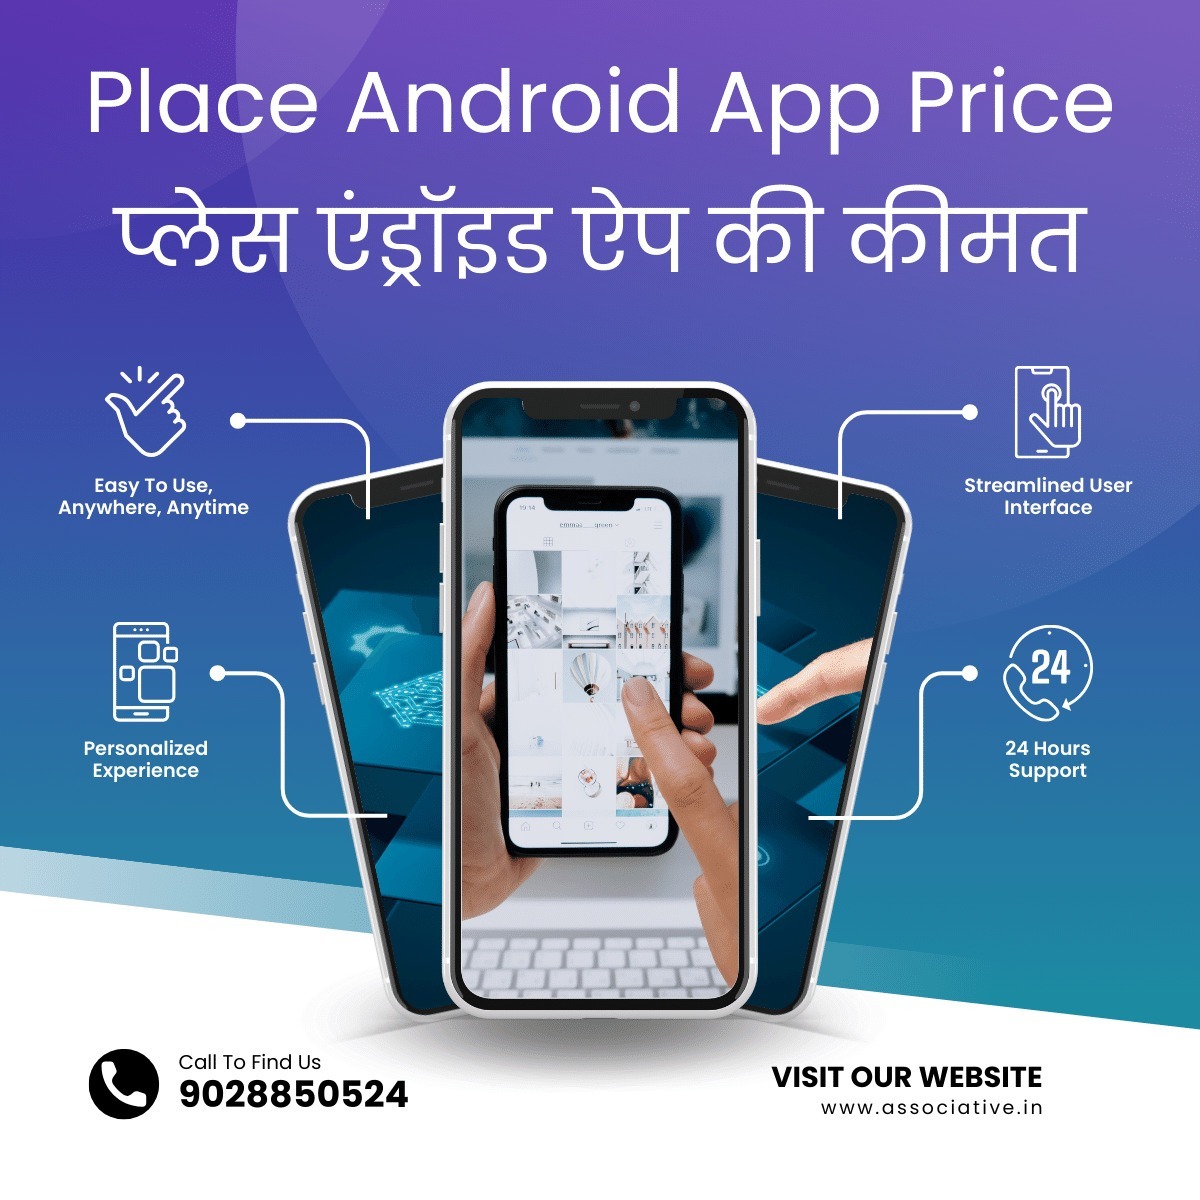 Place Android App Price

प्लेस एंड्रॉइड ऐप की कीमत